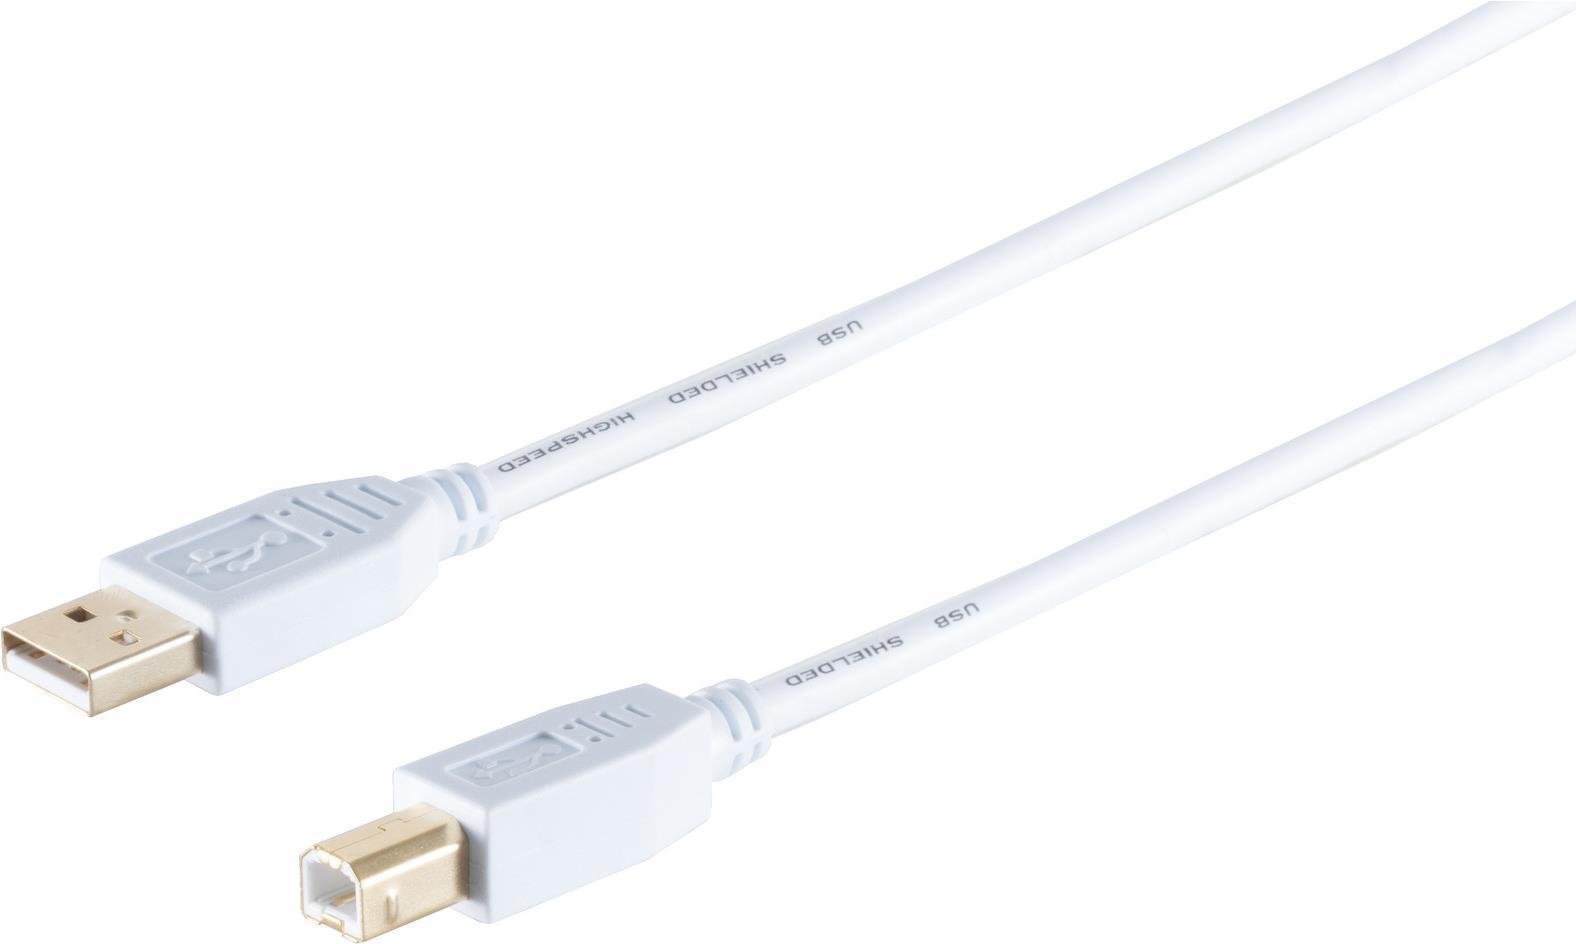 S/CONN maximum connectivity USB High Speed 2.0 Kabel, A/B Stecker, vergoldete Kontakte, USB 2.0, weiß, 1,0m (77021-W)